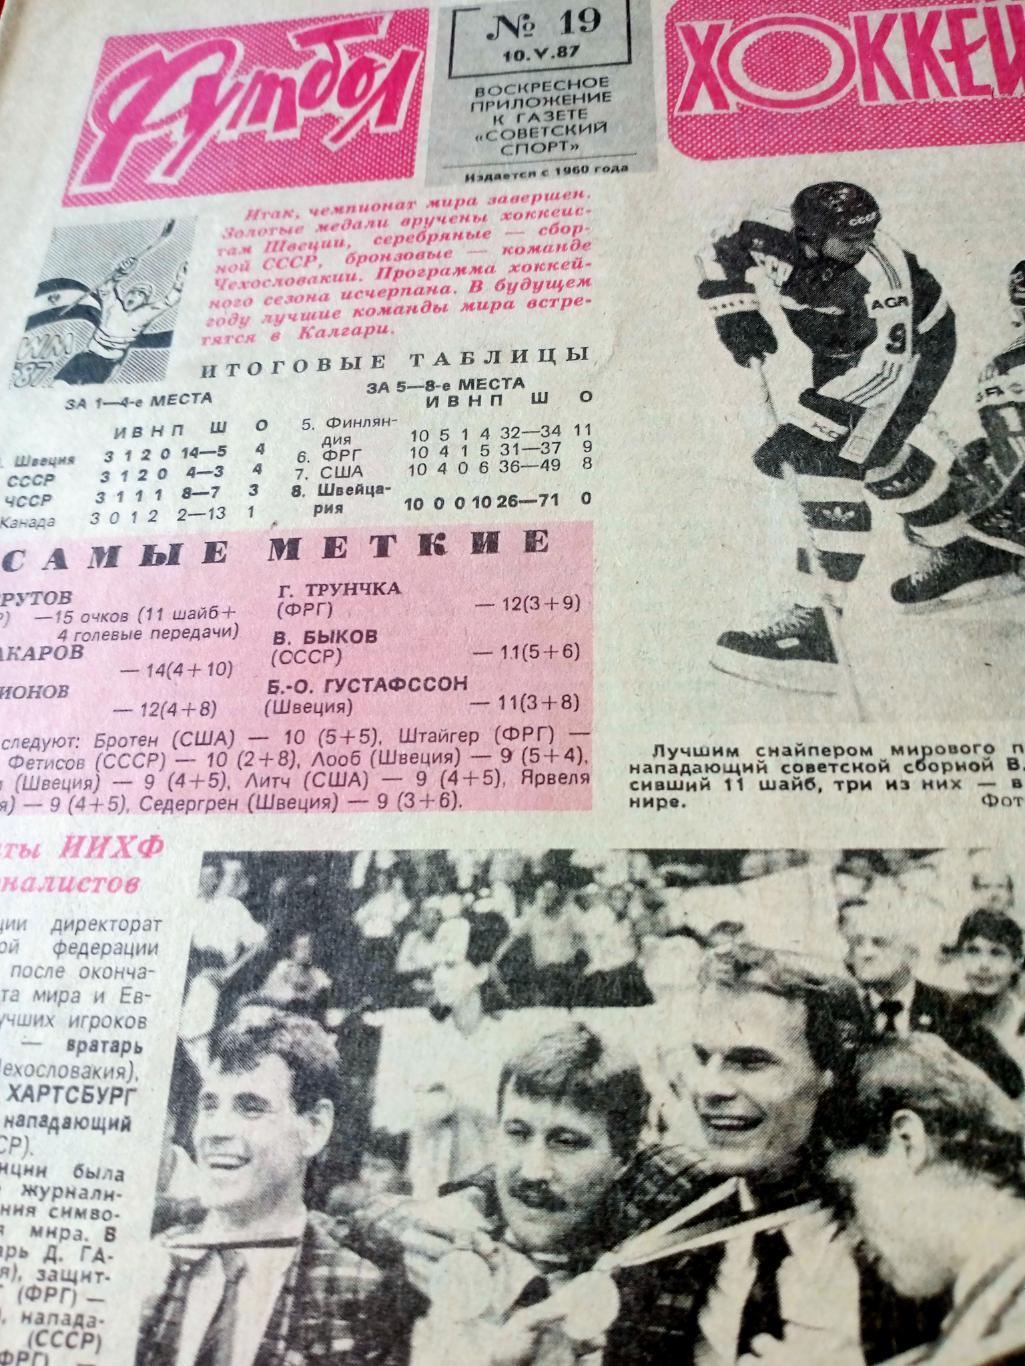 Футбол-Хоккей. 1987 год, № 19